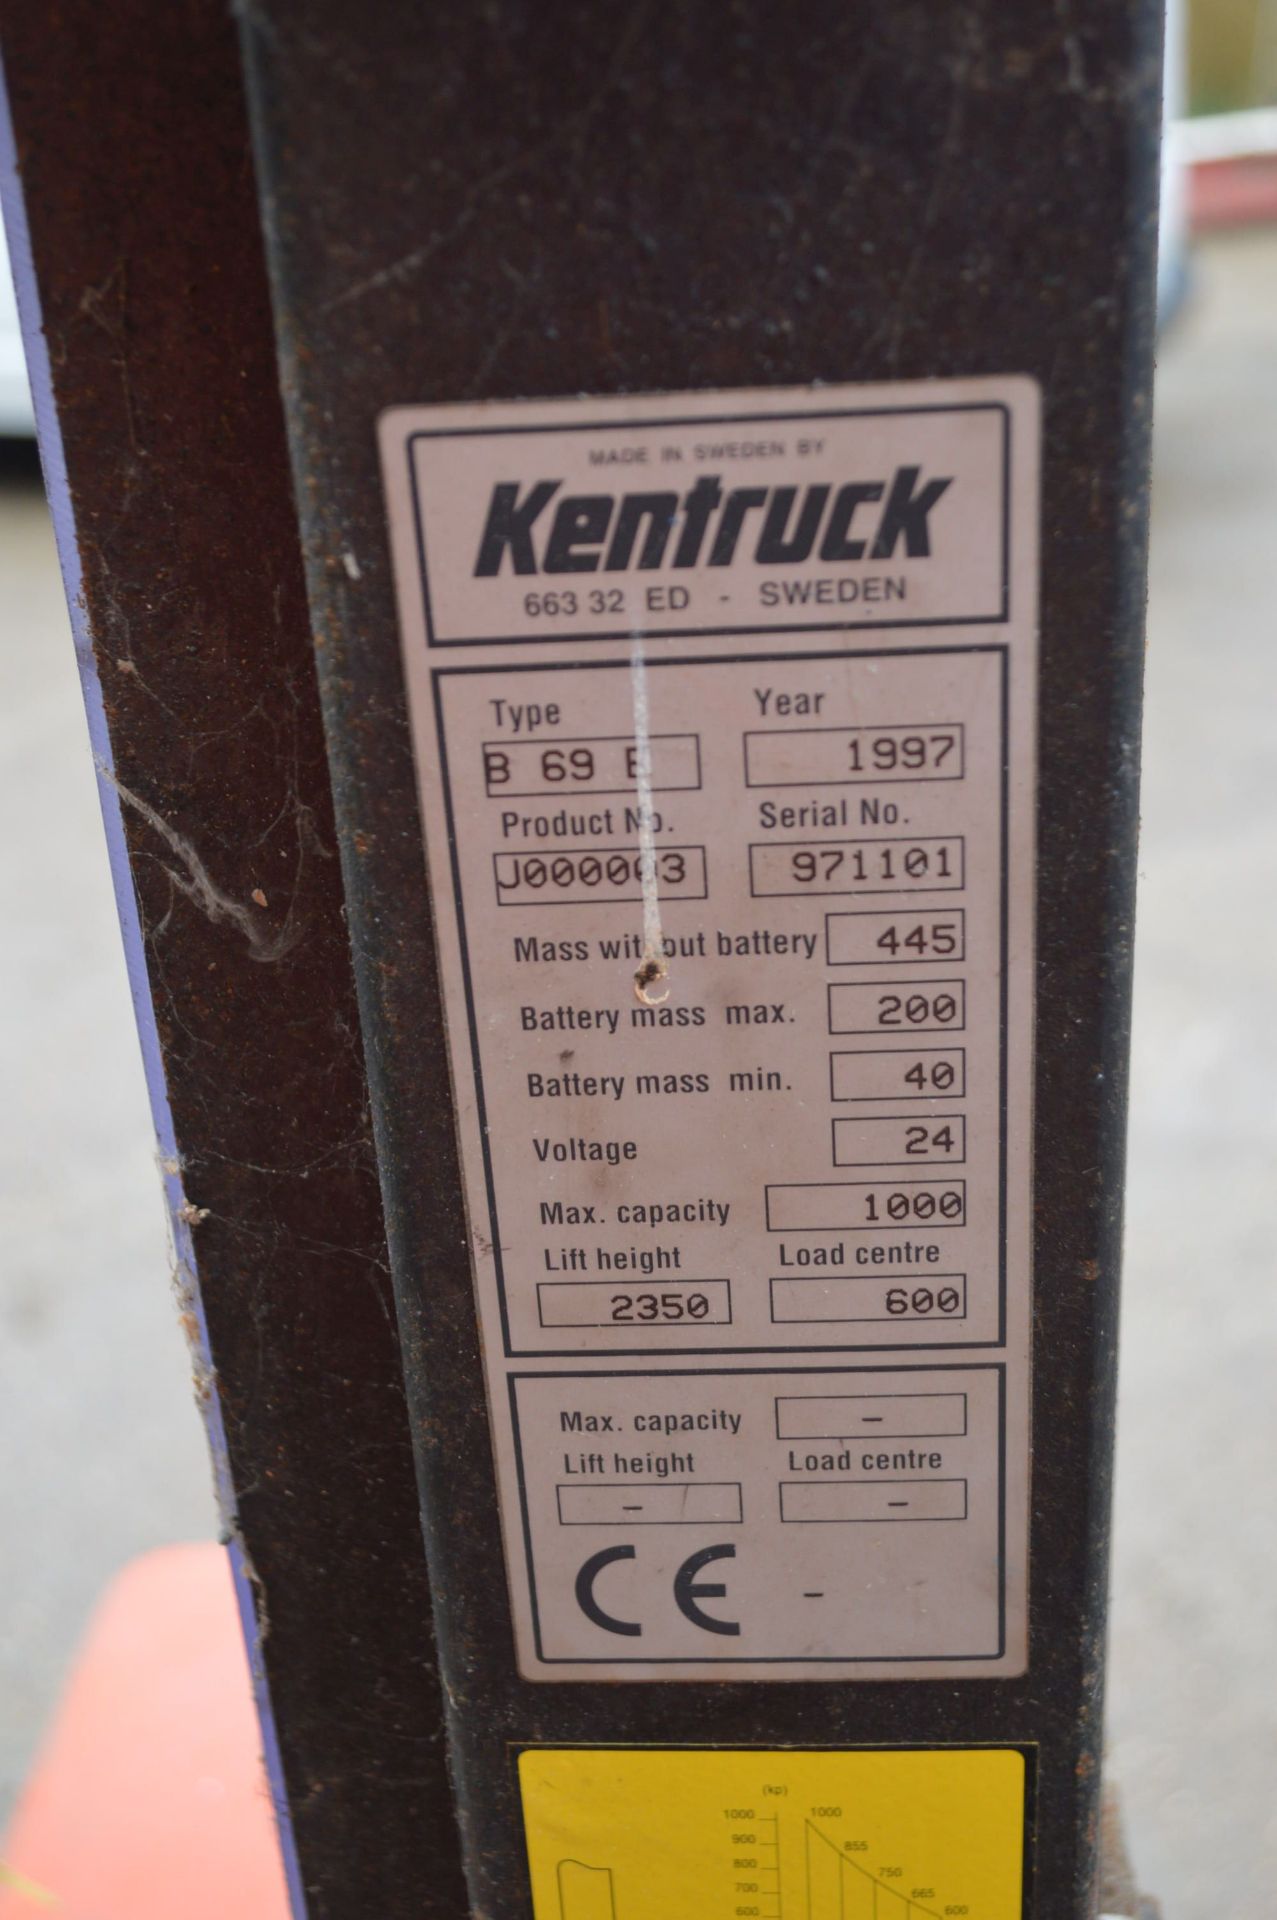 Kentruck B69E 1000kg cap. Pedestrian Operated Battery Electric Fork Lift Truck, serial no. 971101, - Image 3 of 5